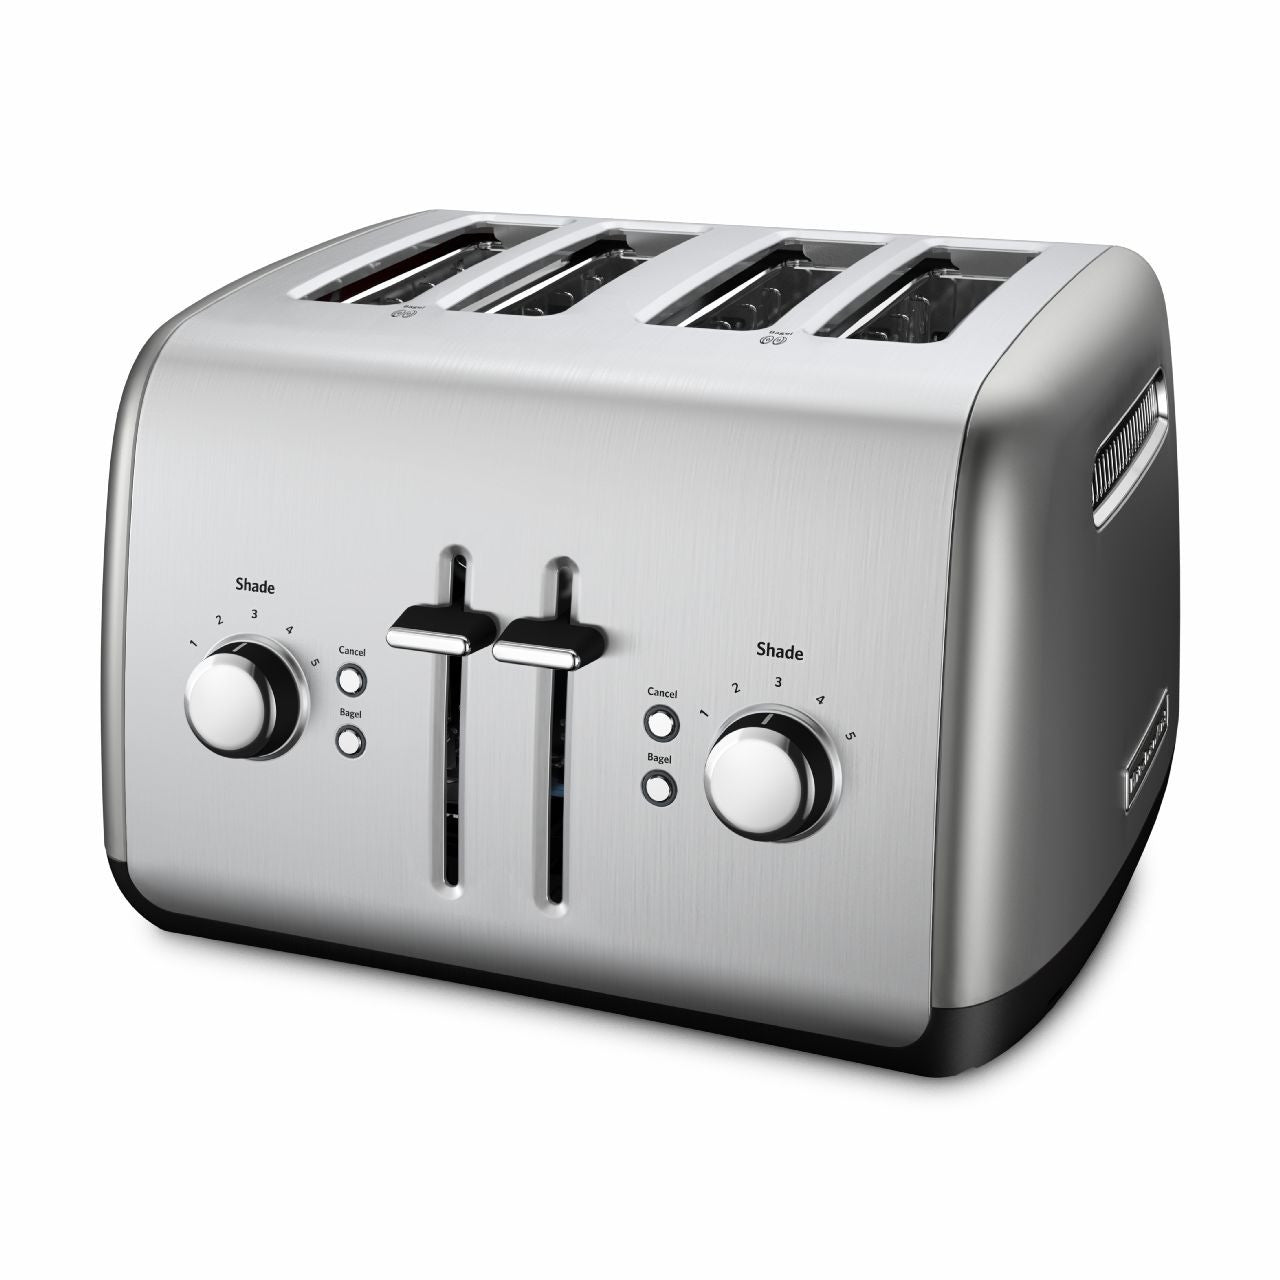 KitchenaidAid 4-Slice Toaster - Contour Silver KMT4115CU